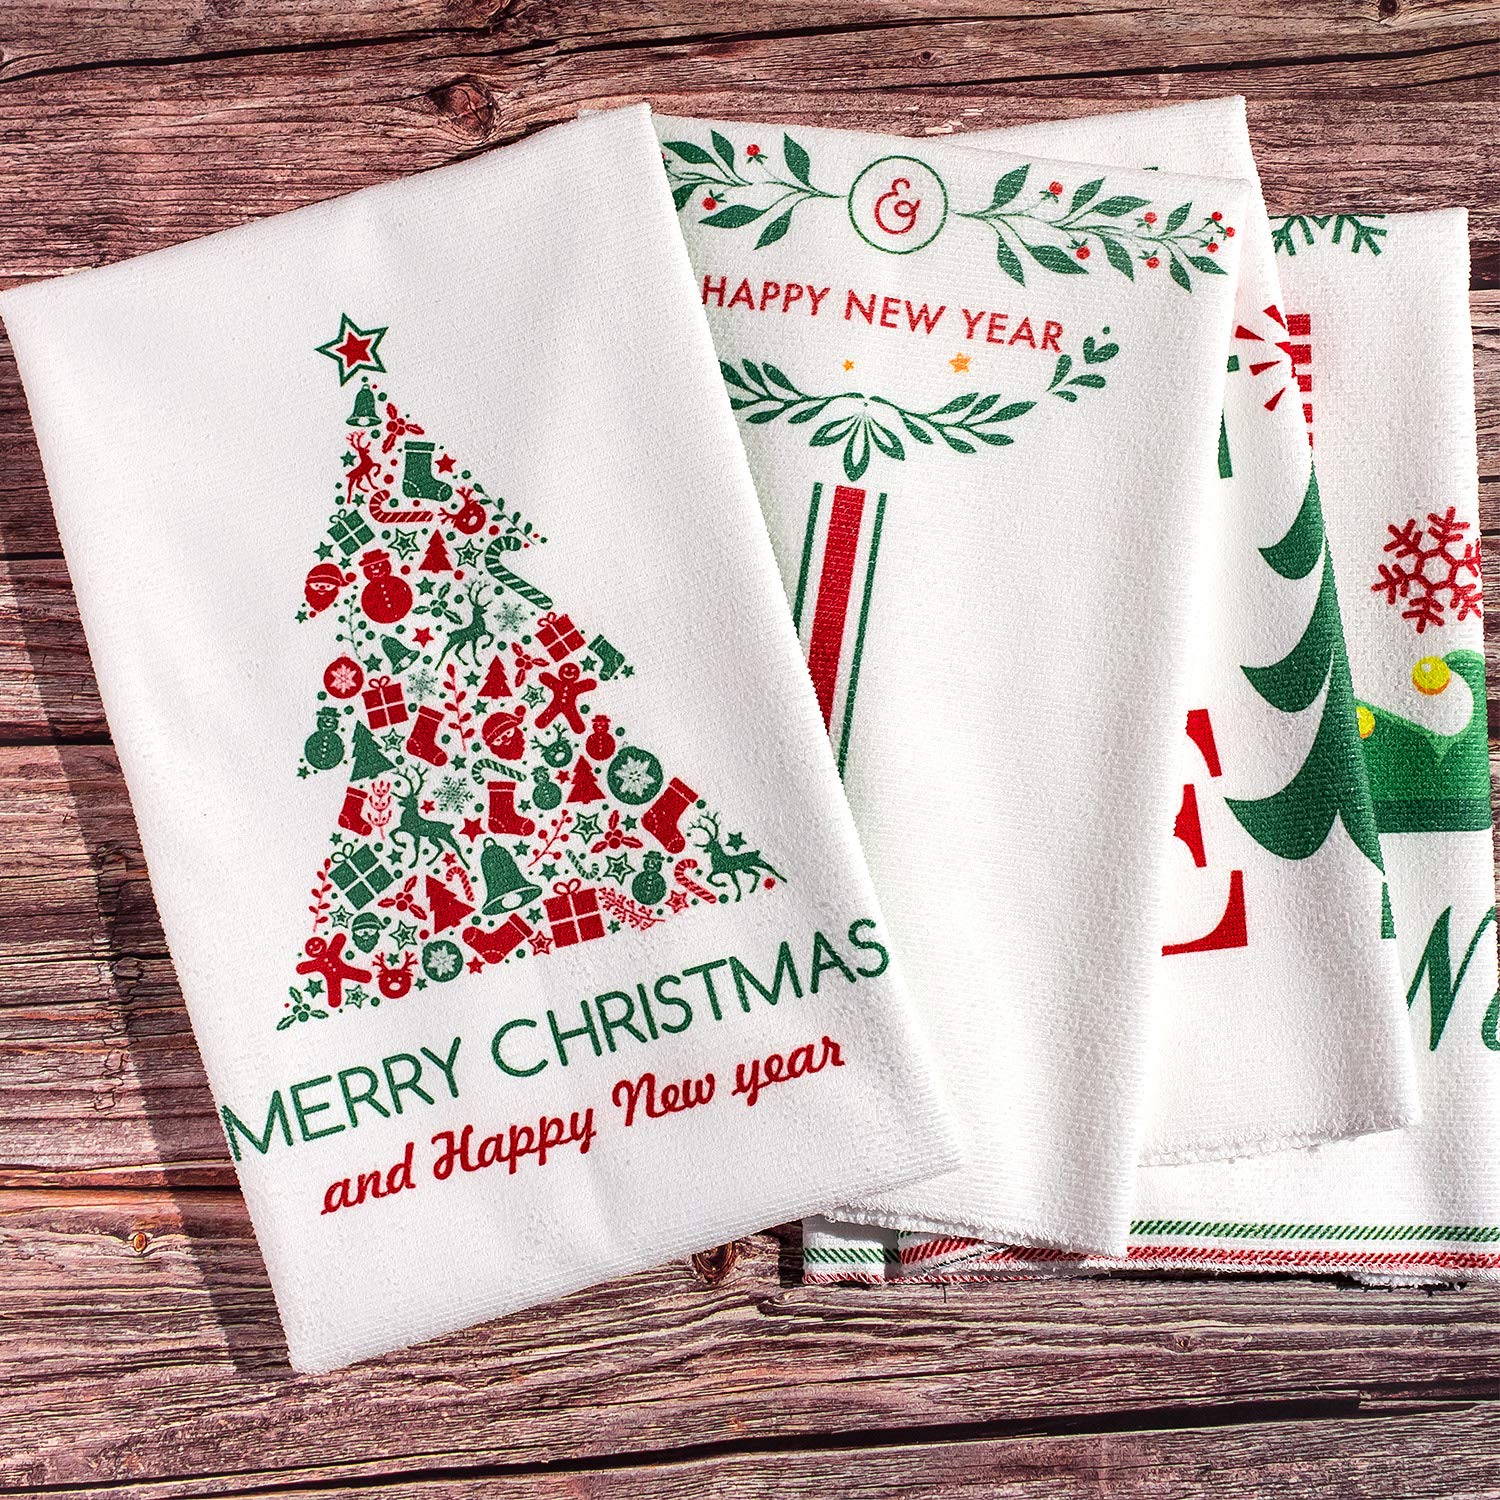 Whaline Christmas Dish Towel Set, White Winter Holiday Kitchen Dishtowels 18" x 28" Oversized Tea Dish Towels for Holiday, Home Decor, Gift-Christmas, 4 Pack